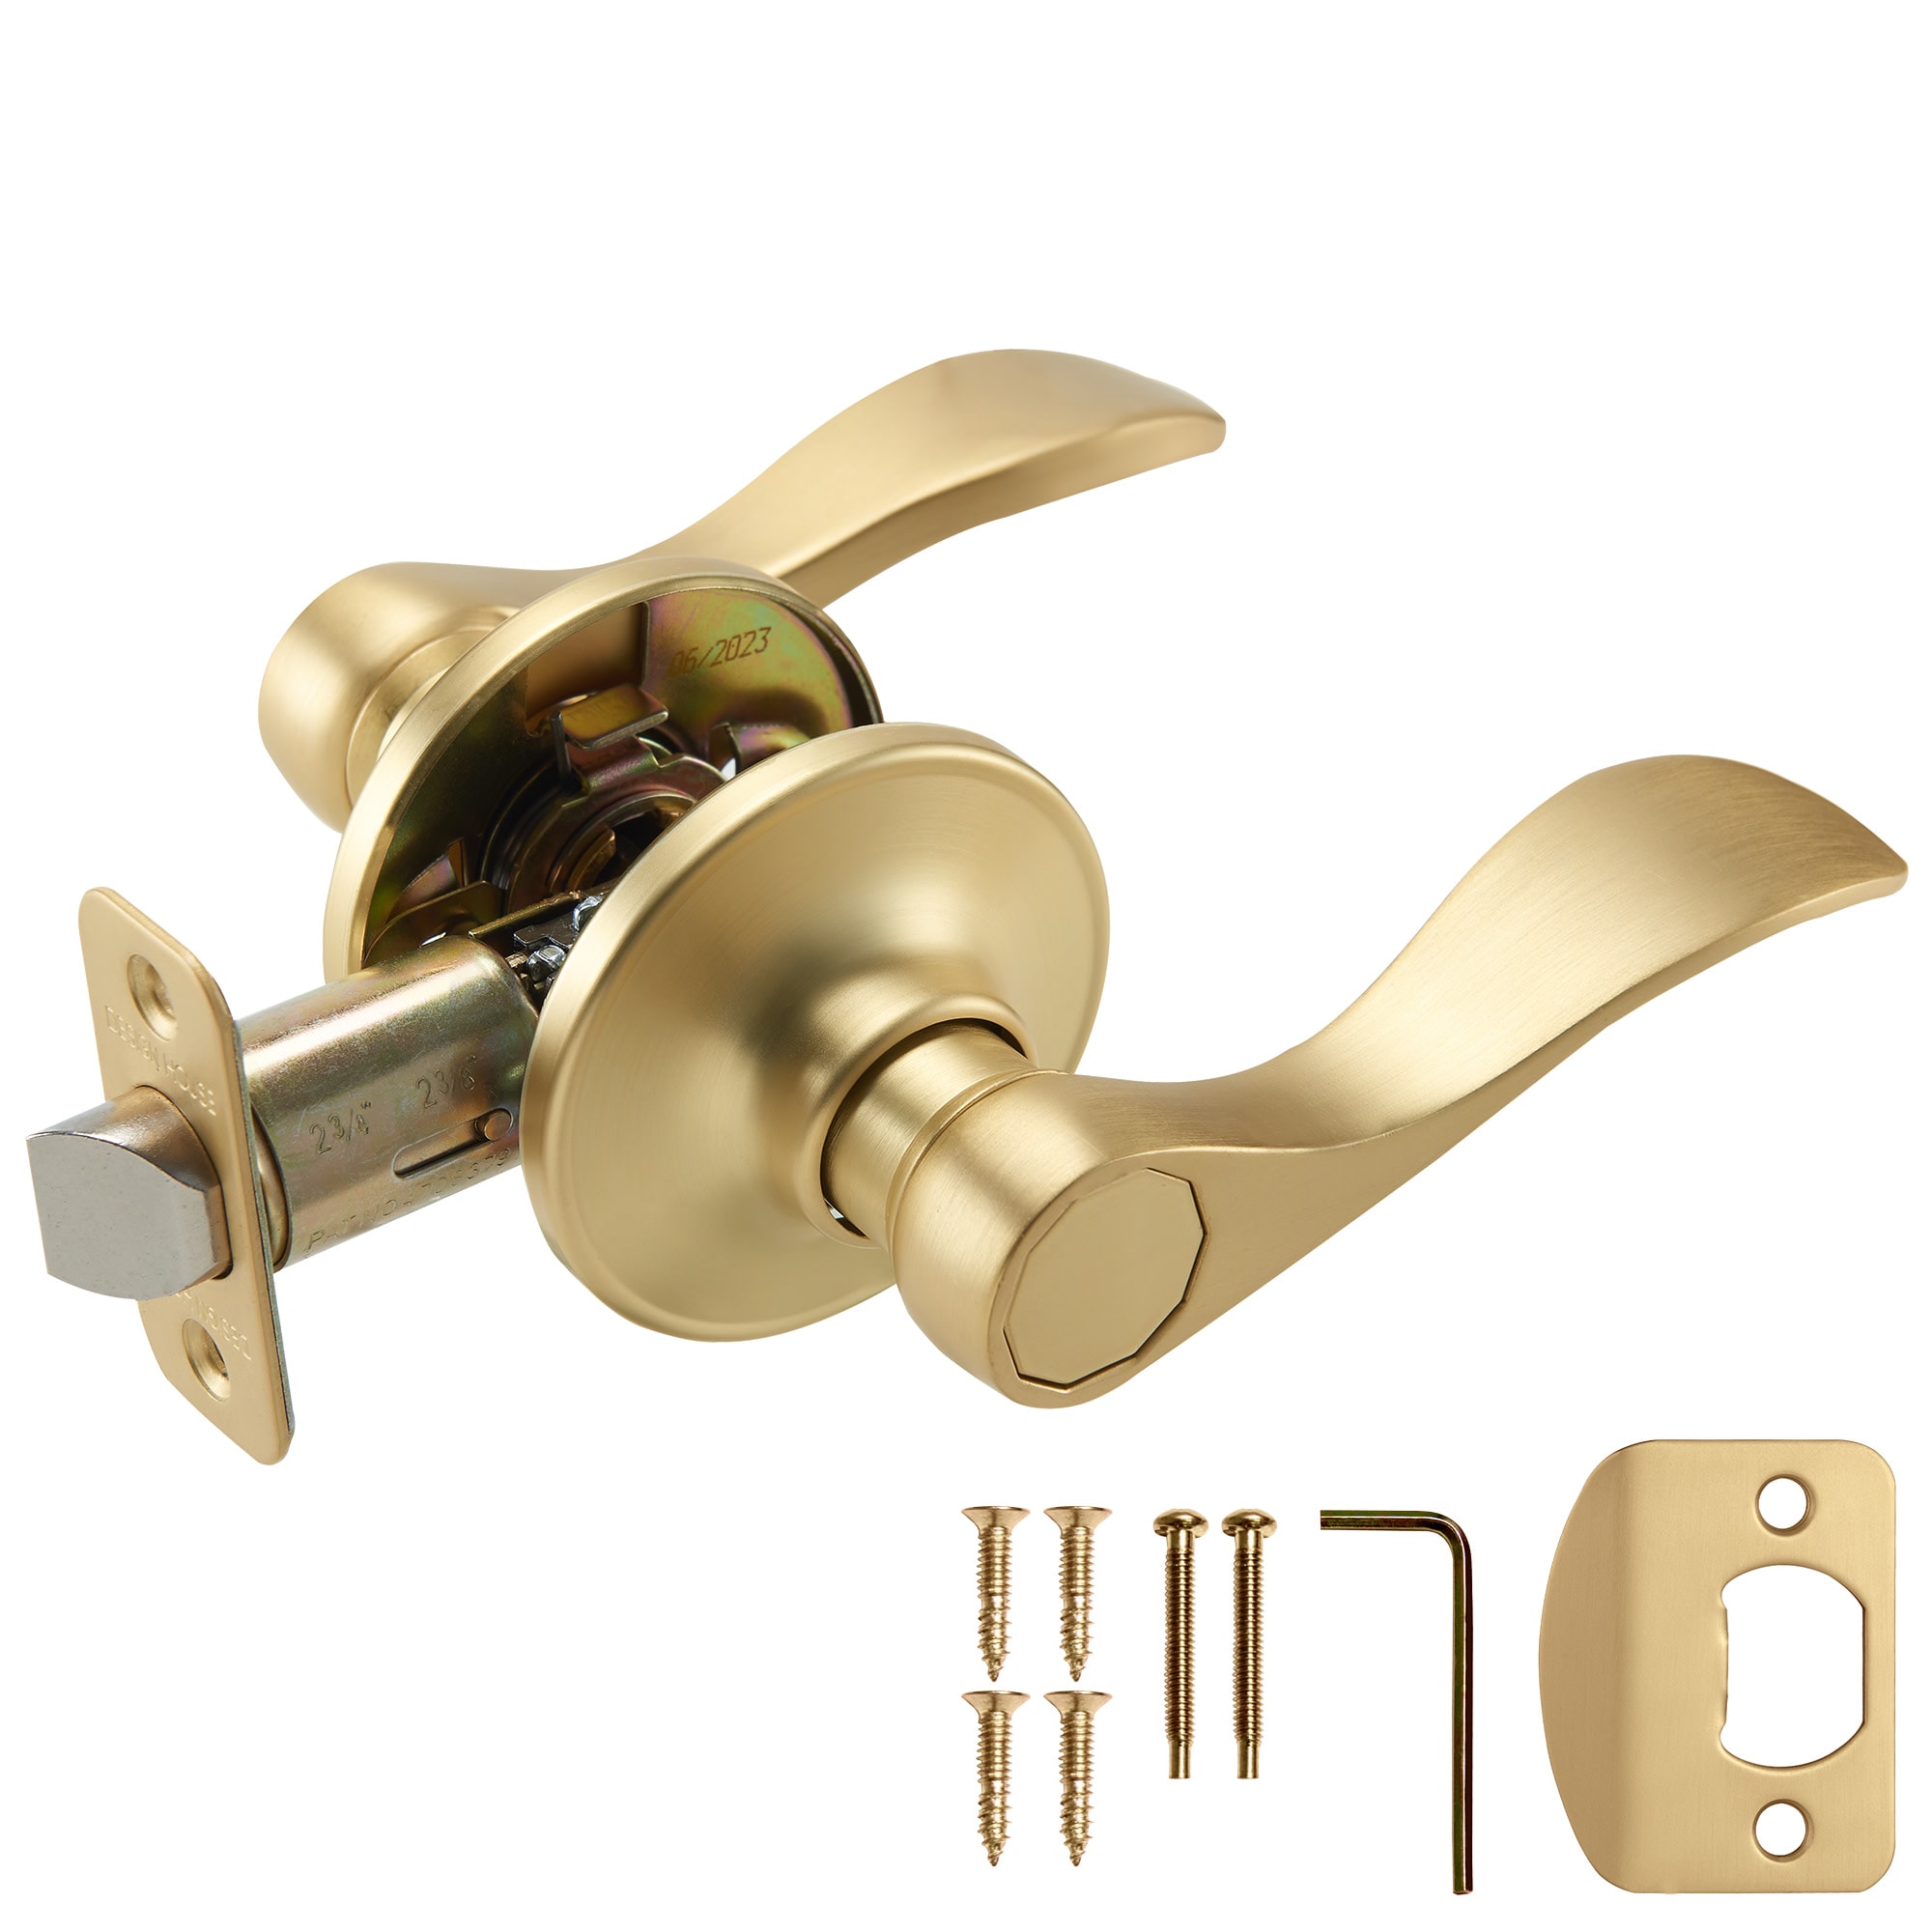 Gold-Interior Lock Passage Door-Knob - Brushed Brass Handles for Hall Closet